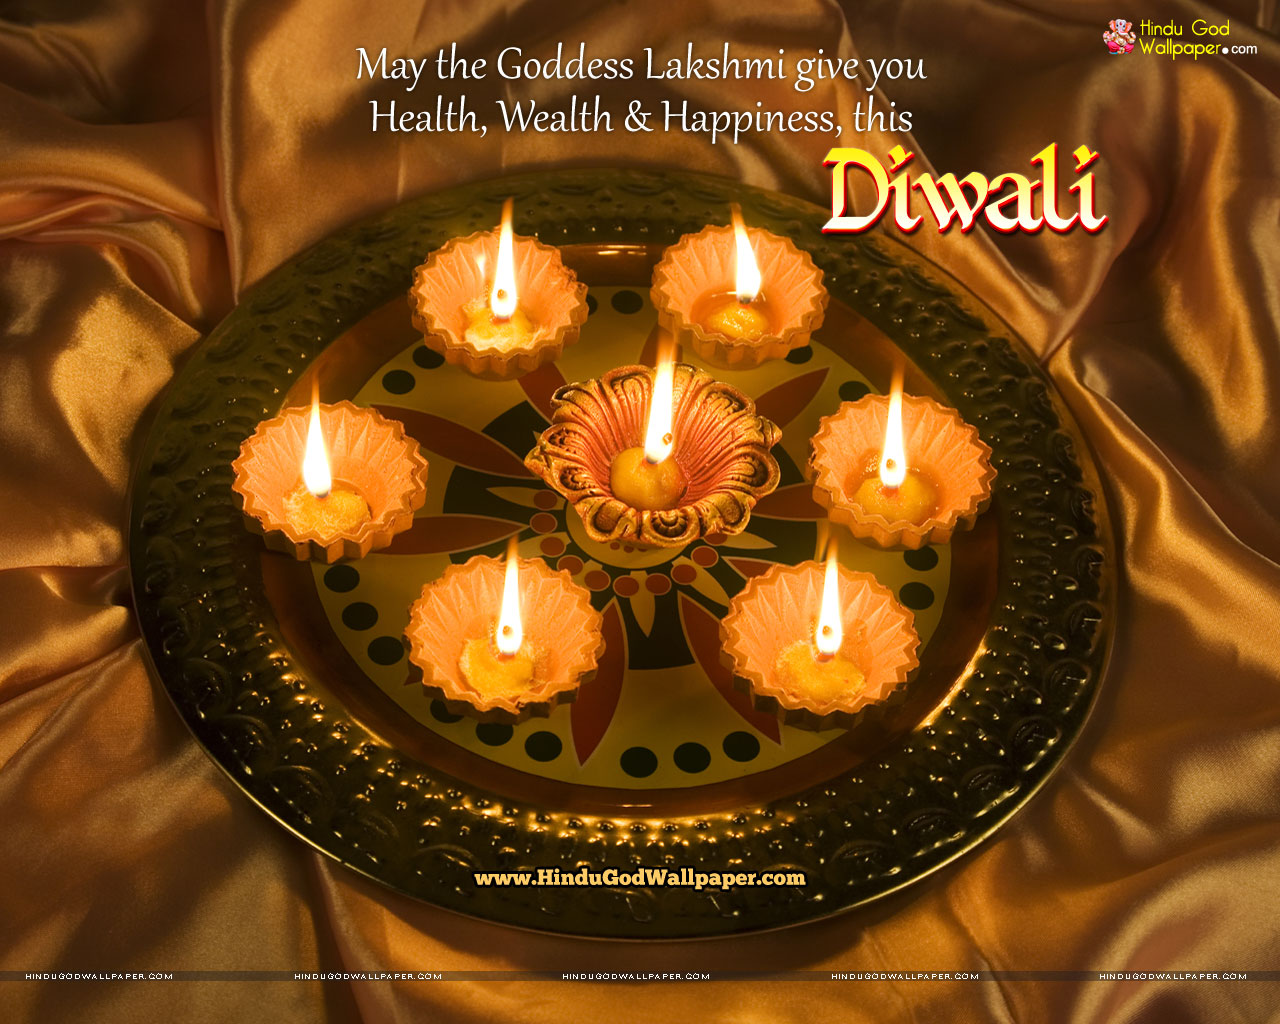 Wish You Diwali